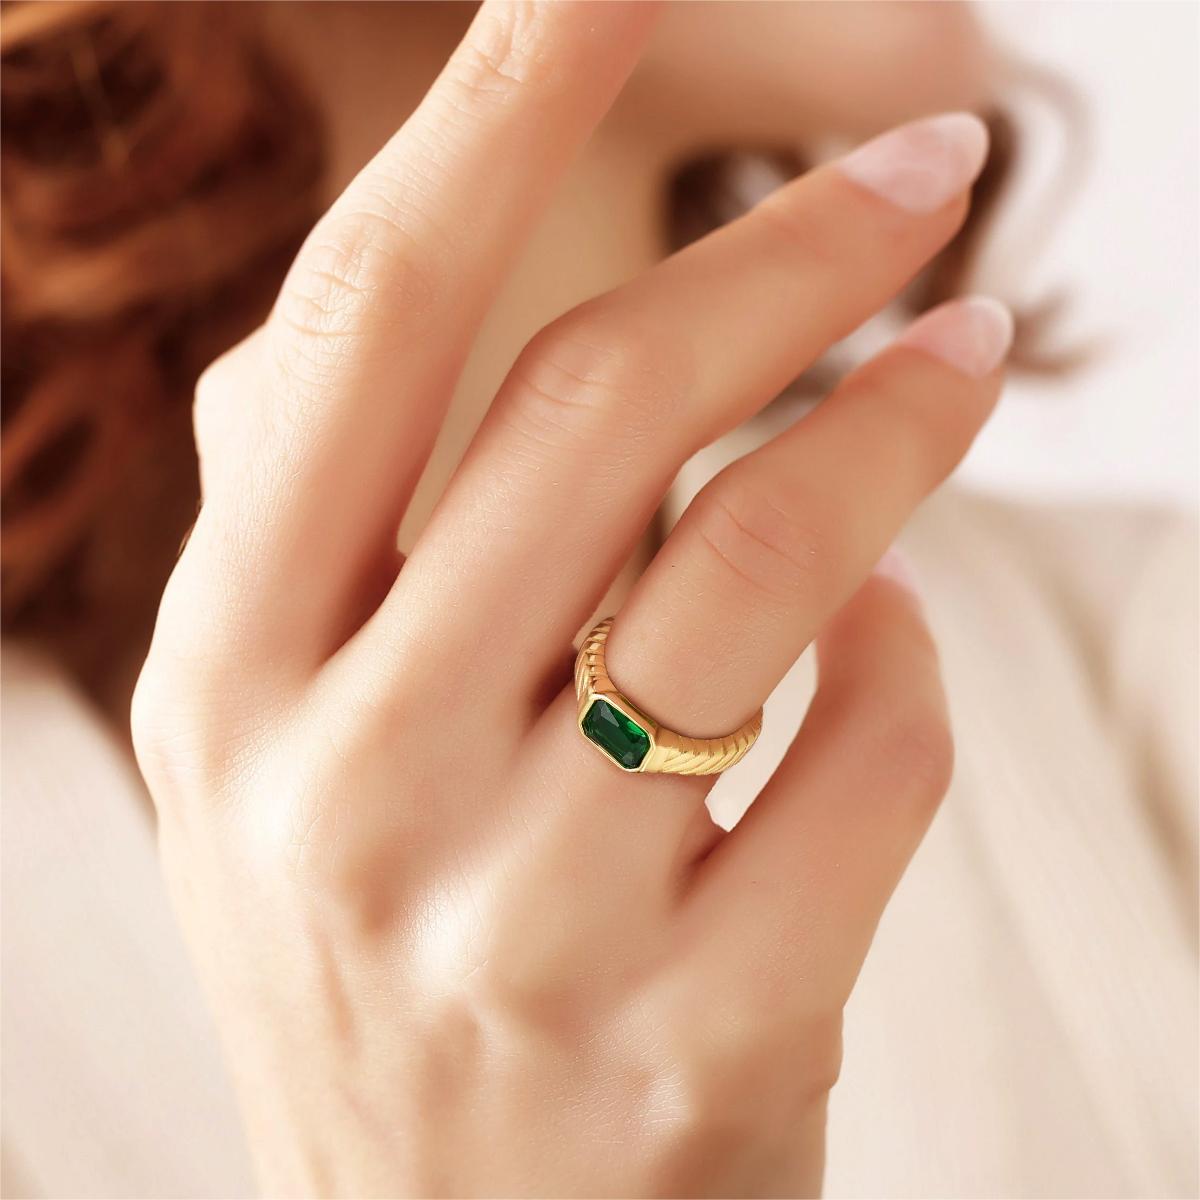 Birthstonesjewelry Birthstone Ring for Women